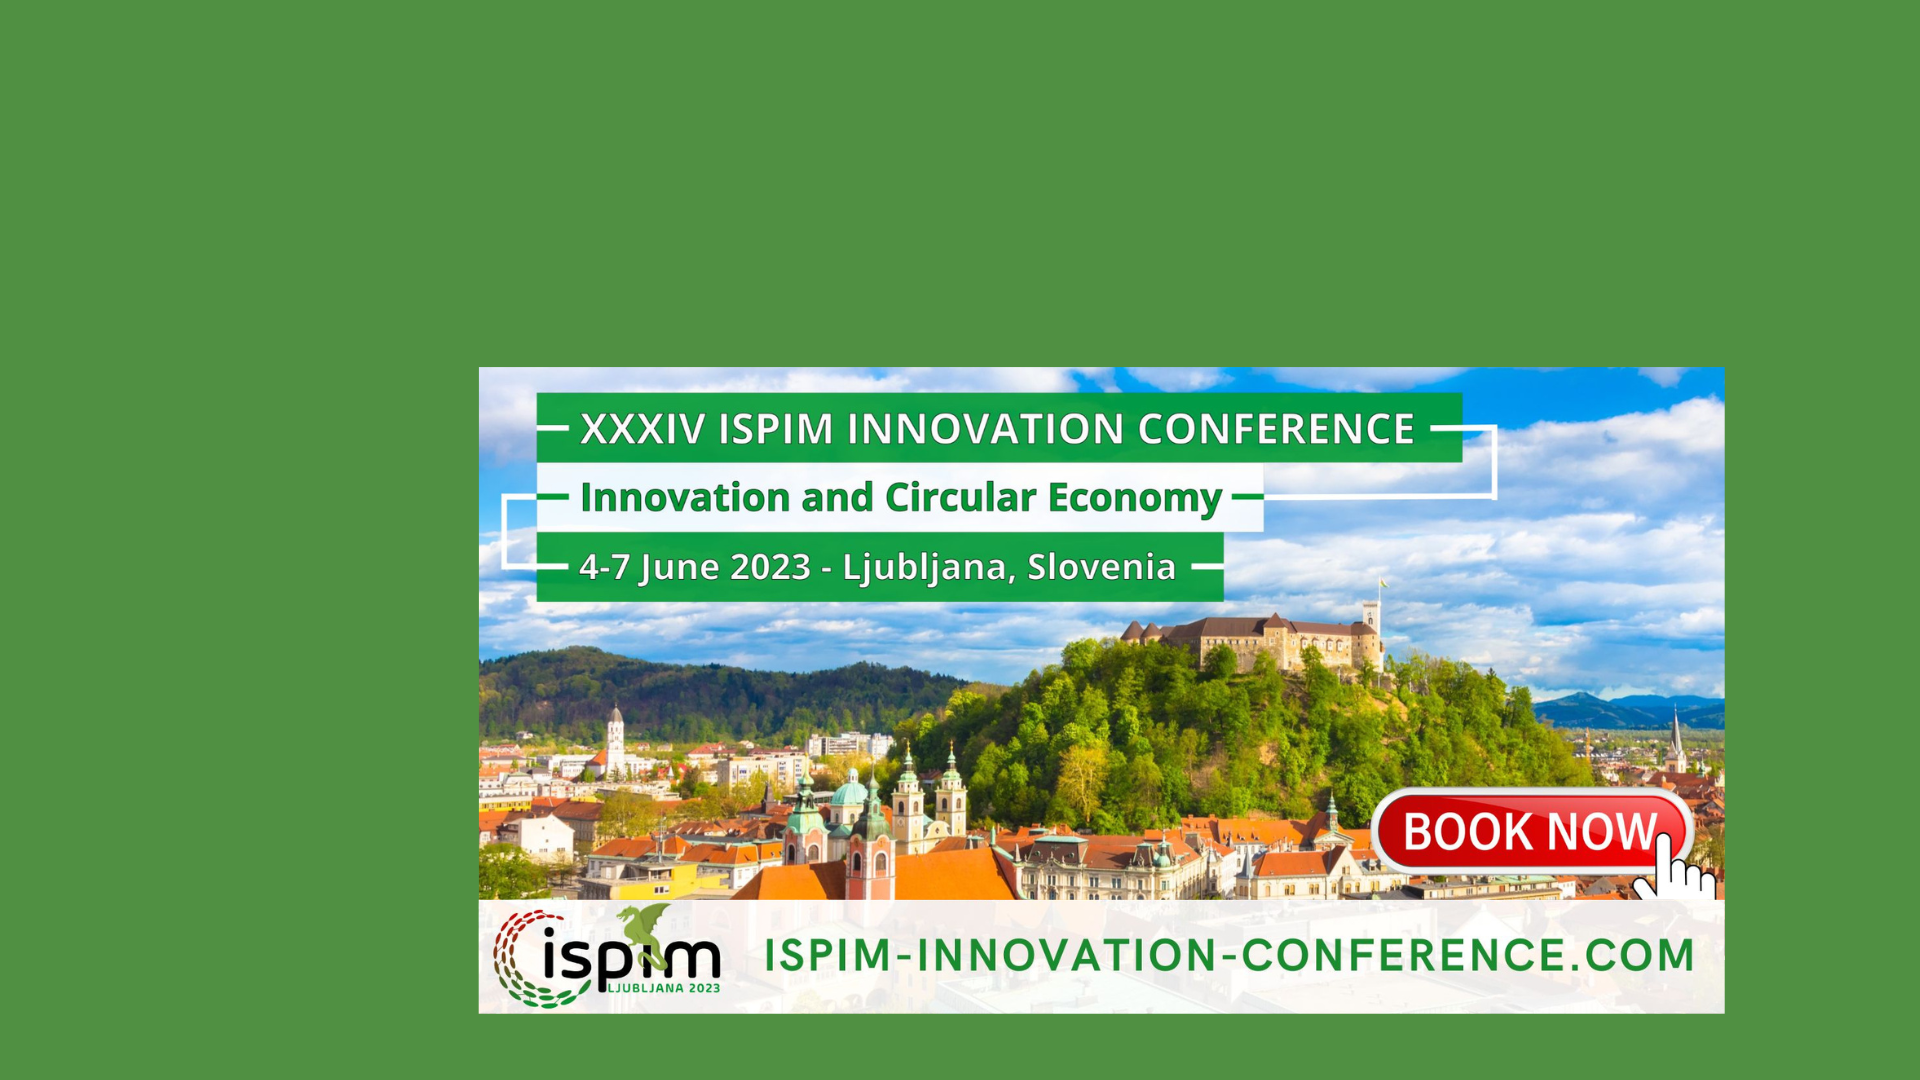 XXXIV ISPIM INNOVATION CONFERENCE - Innovation and Circular Economy